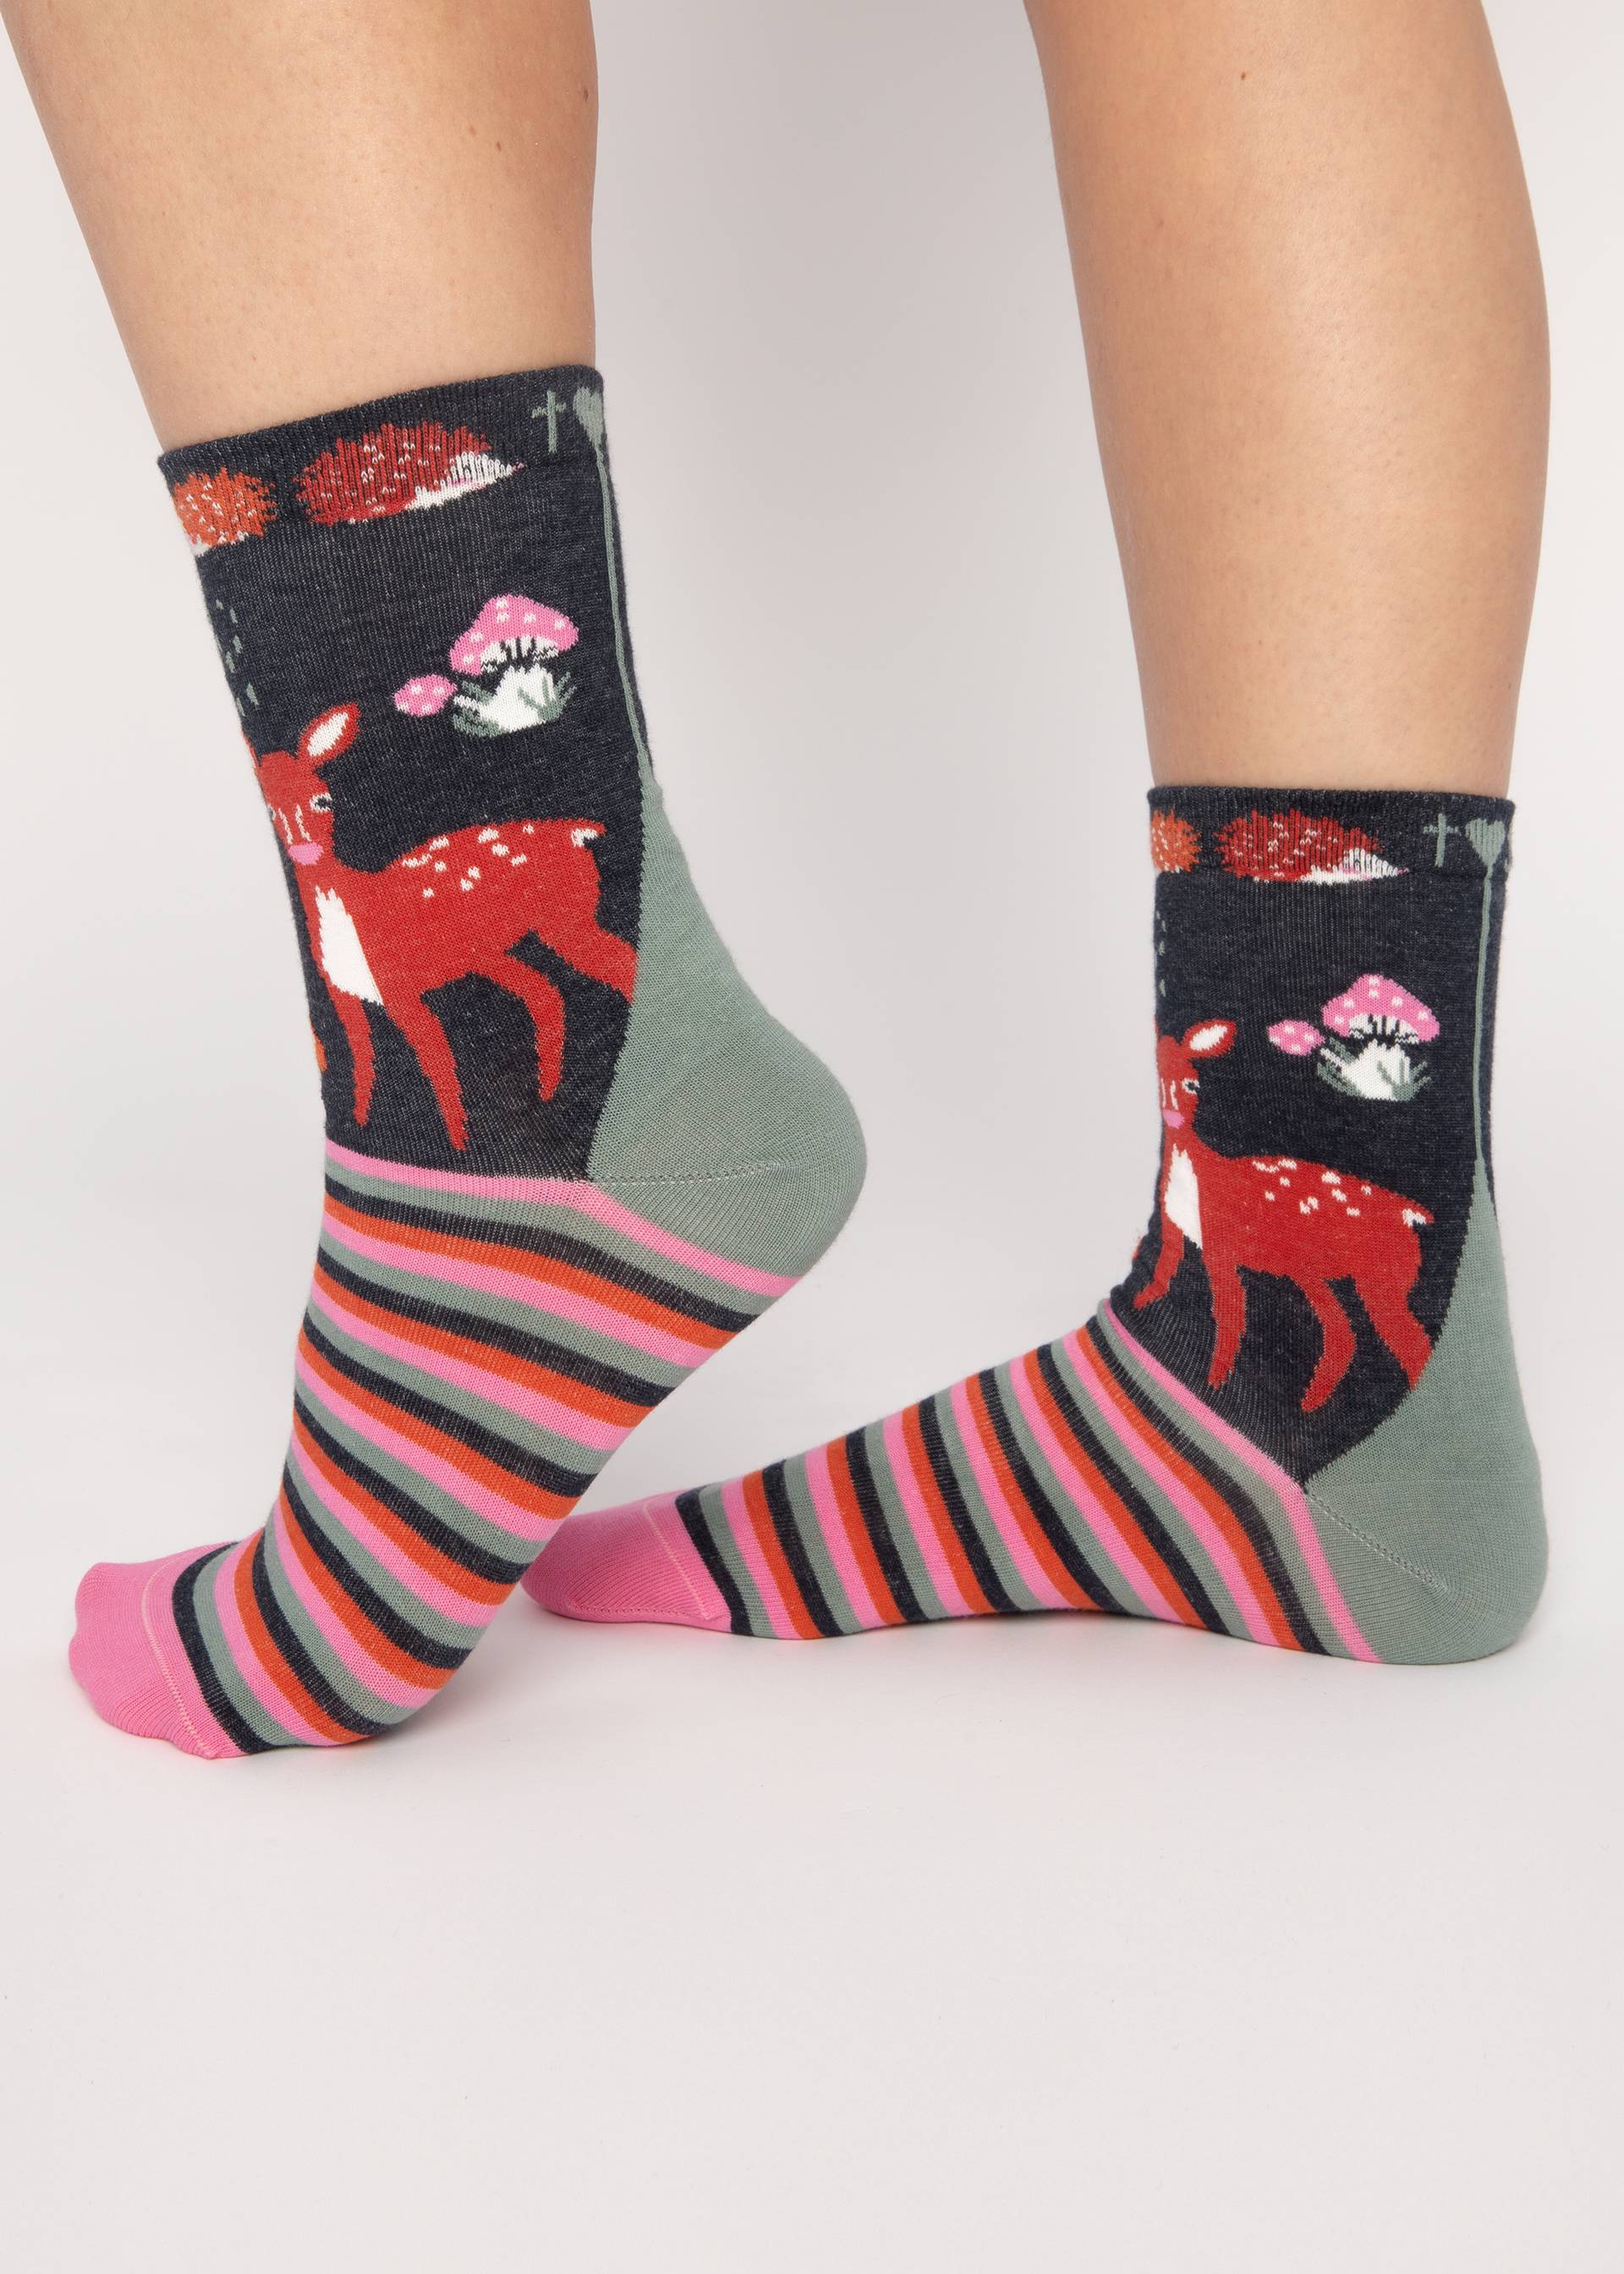 Cotton socks Sensational  Steps, animal friend, Socks, Blue